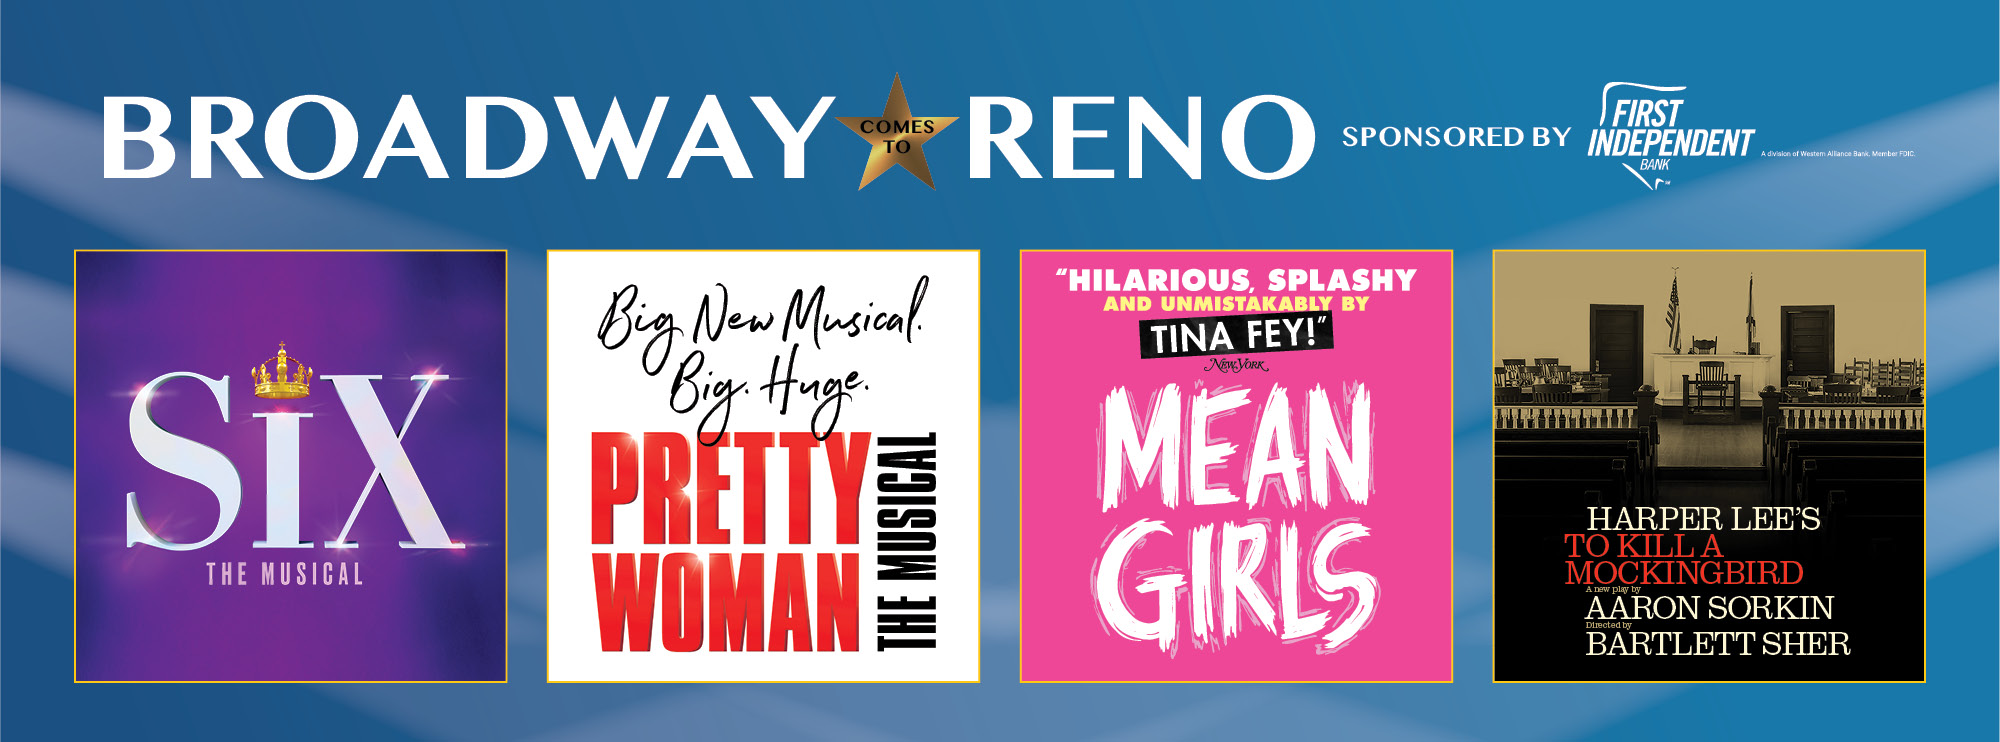 Broadway Comes To Reno